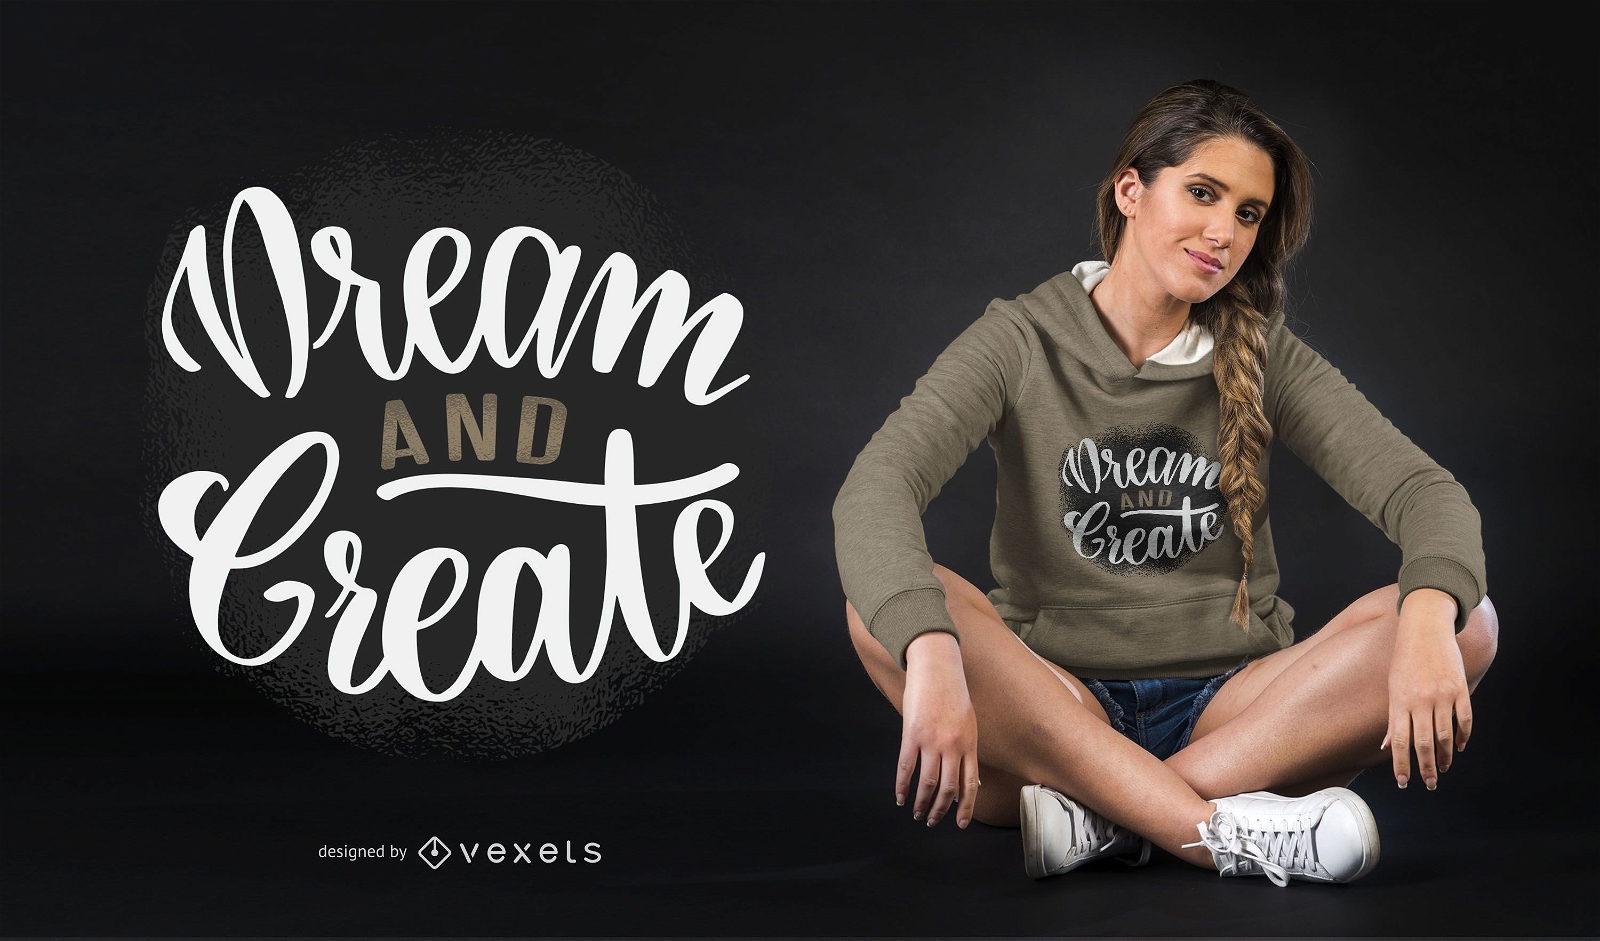 Dream and create t-shirt design